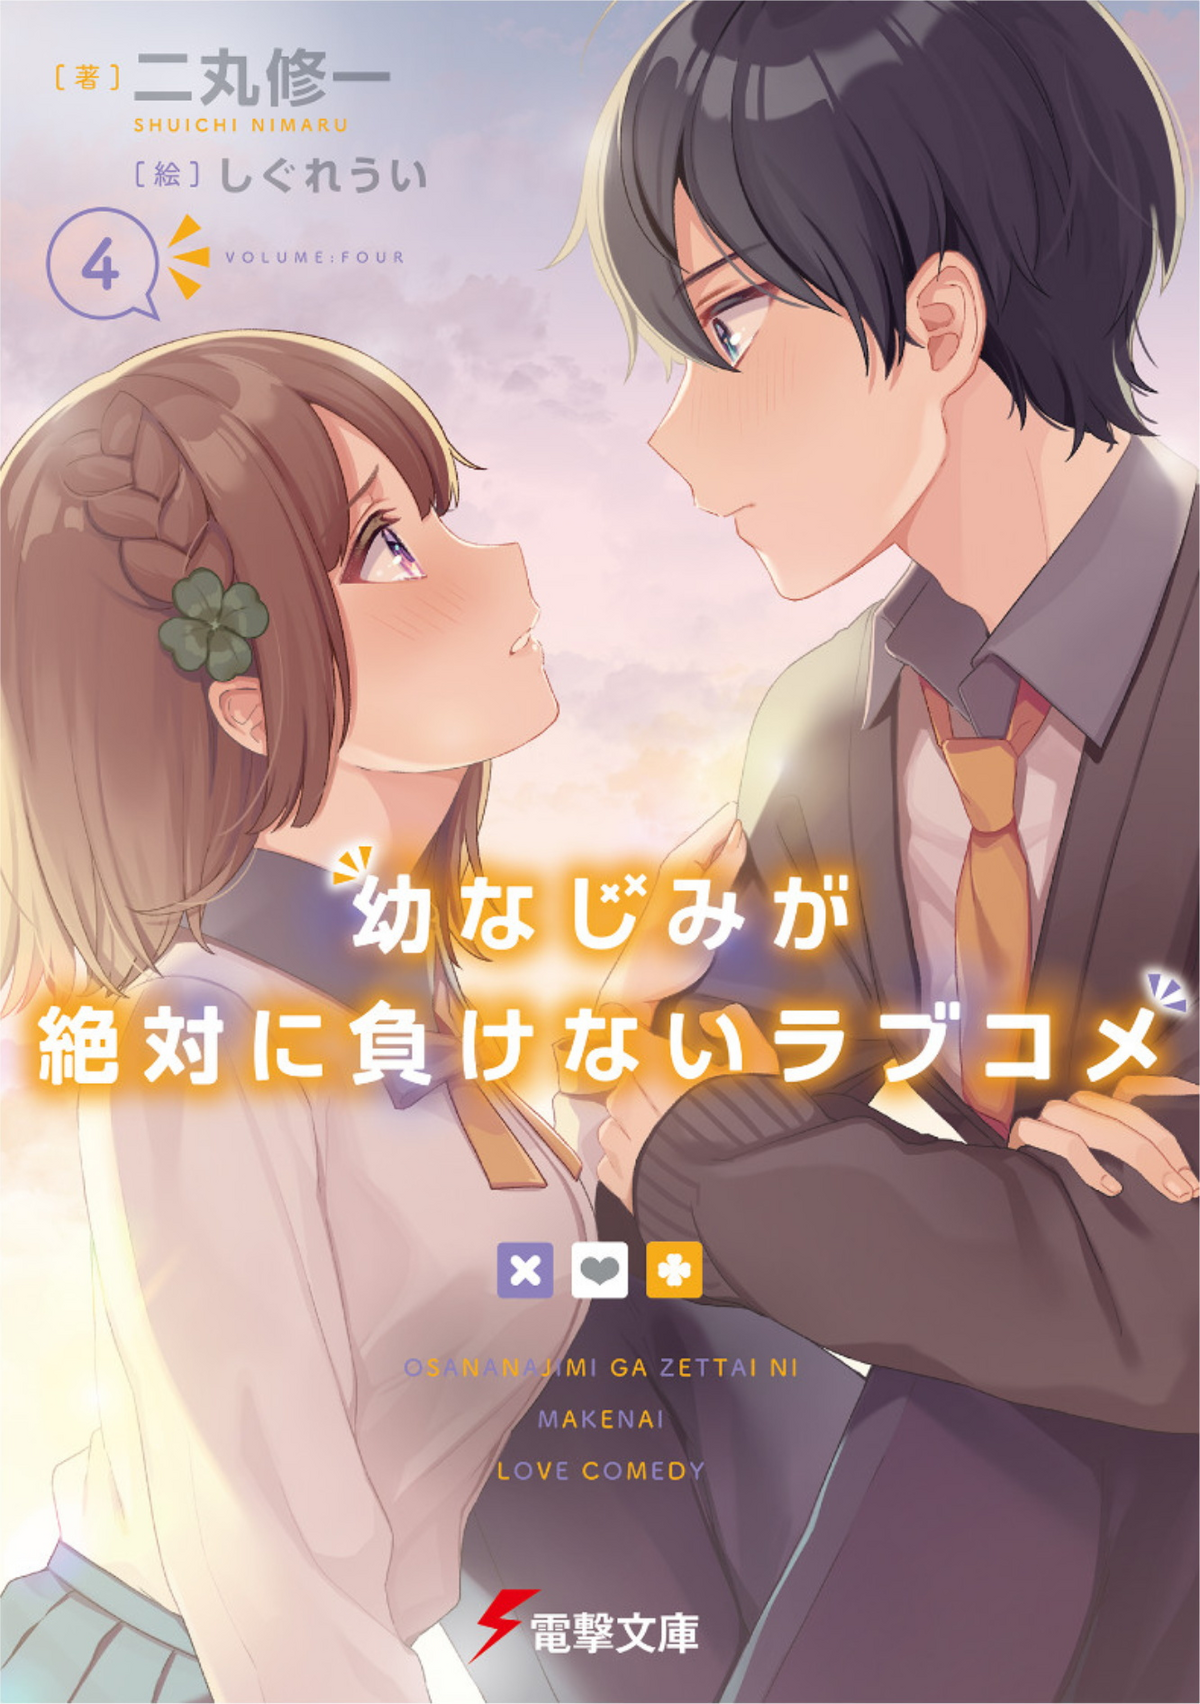 Osananajimi ga Zettai ni Makenai Love Comedy anime adaptation announced :  r/LightNovels